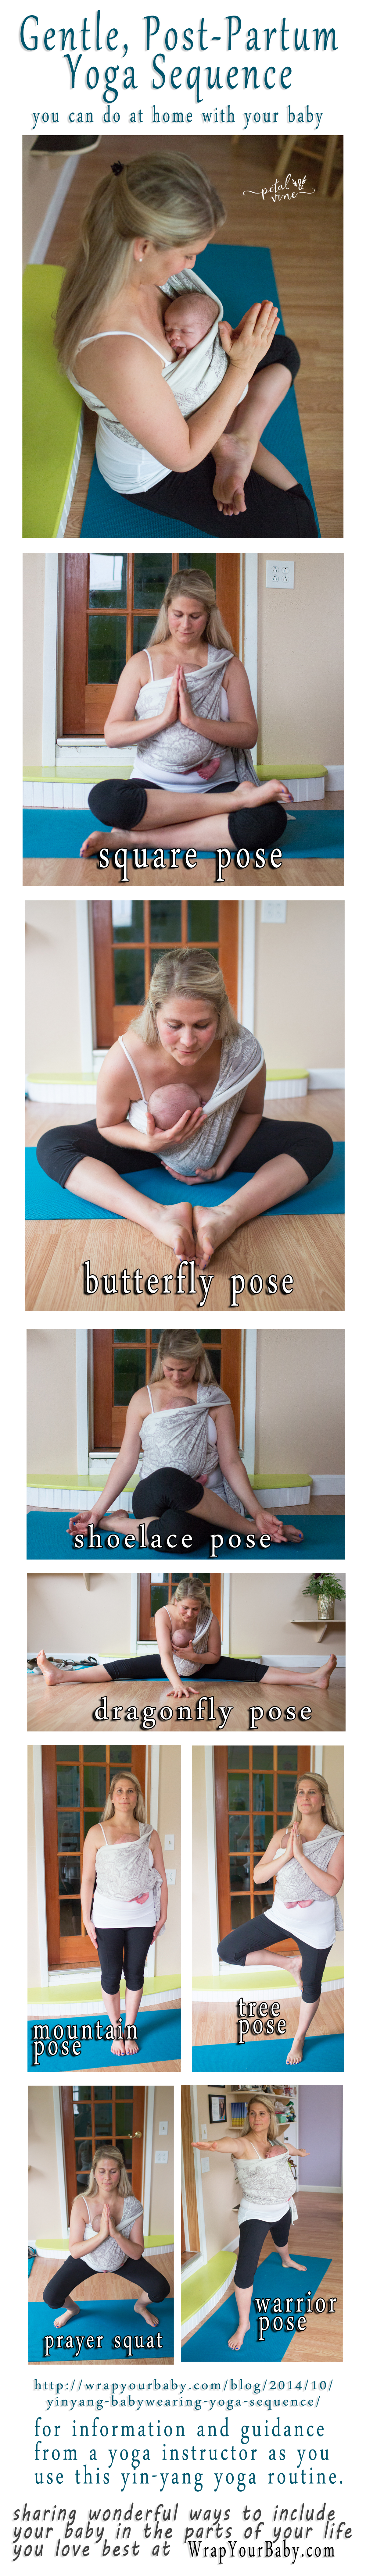 Lisa McBryde's Yoga Flow - HealthScope® Magazine